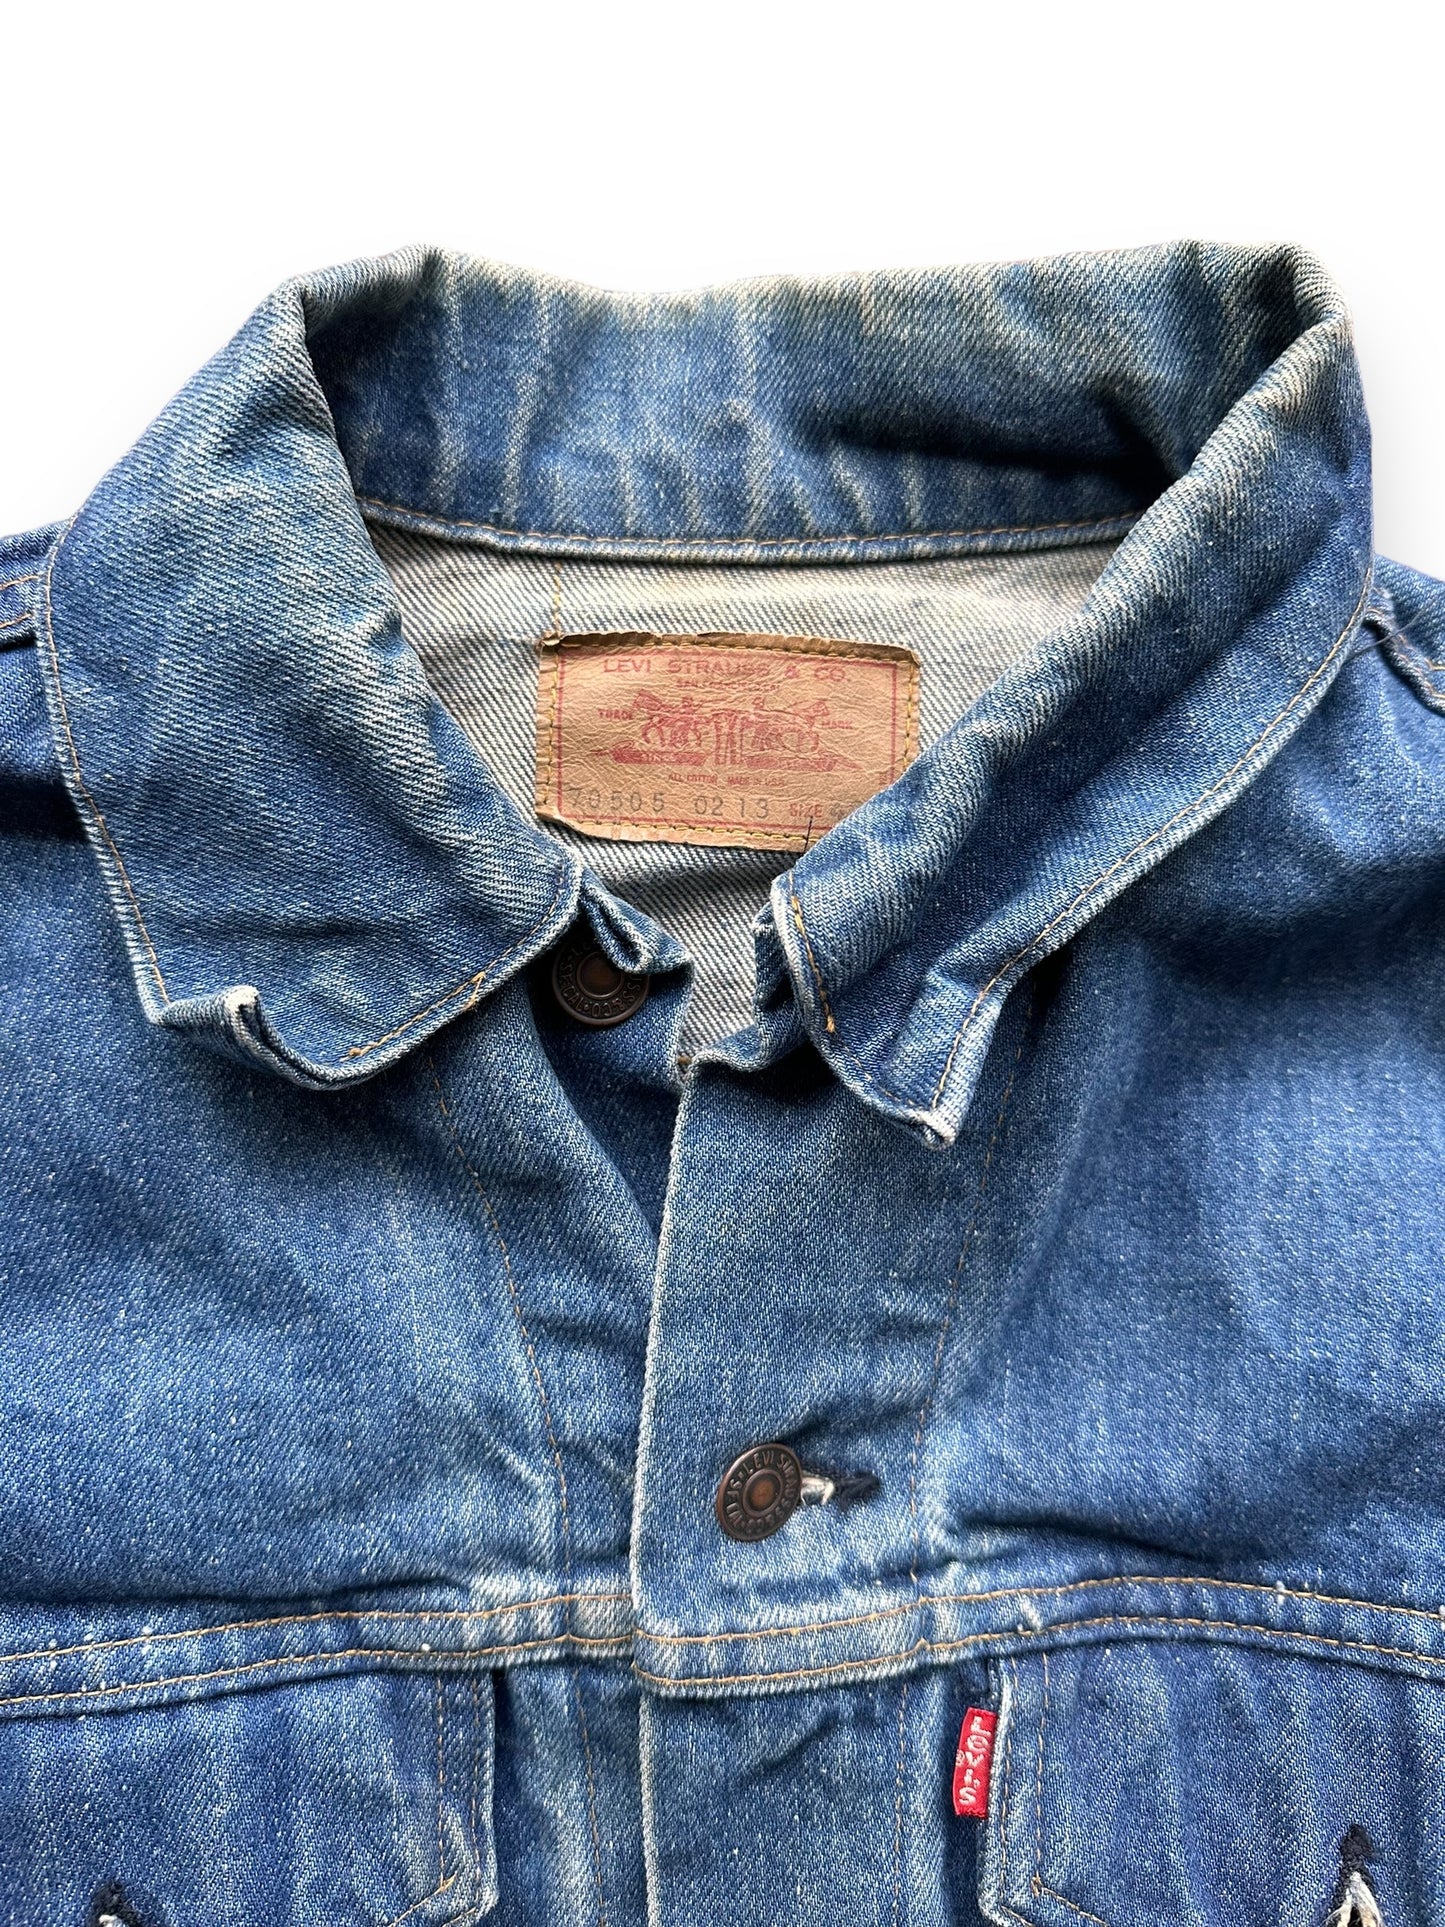 Tag View of Vintage 2-Pocket Levi's Type III Denim Jacket SZ 42 | Vintage Denim Workwear Seattle | Seattle Vintage Denim